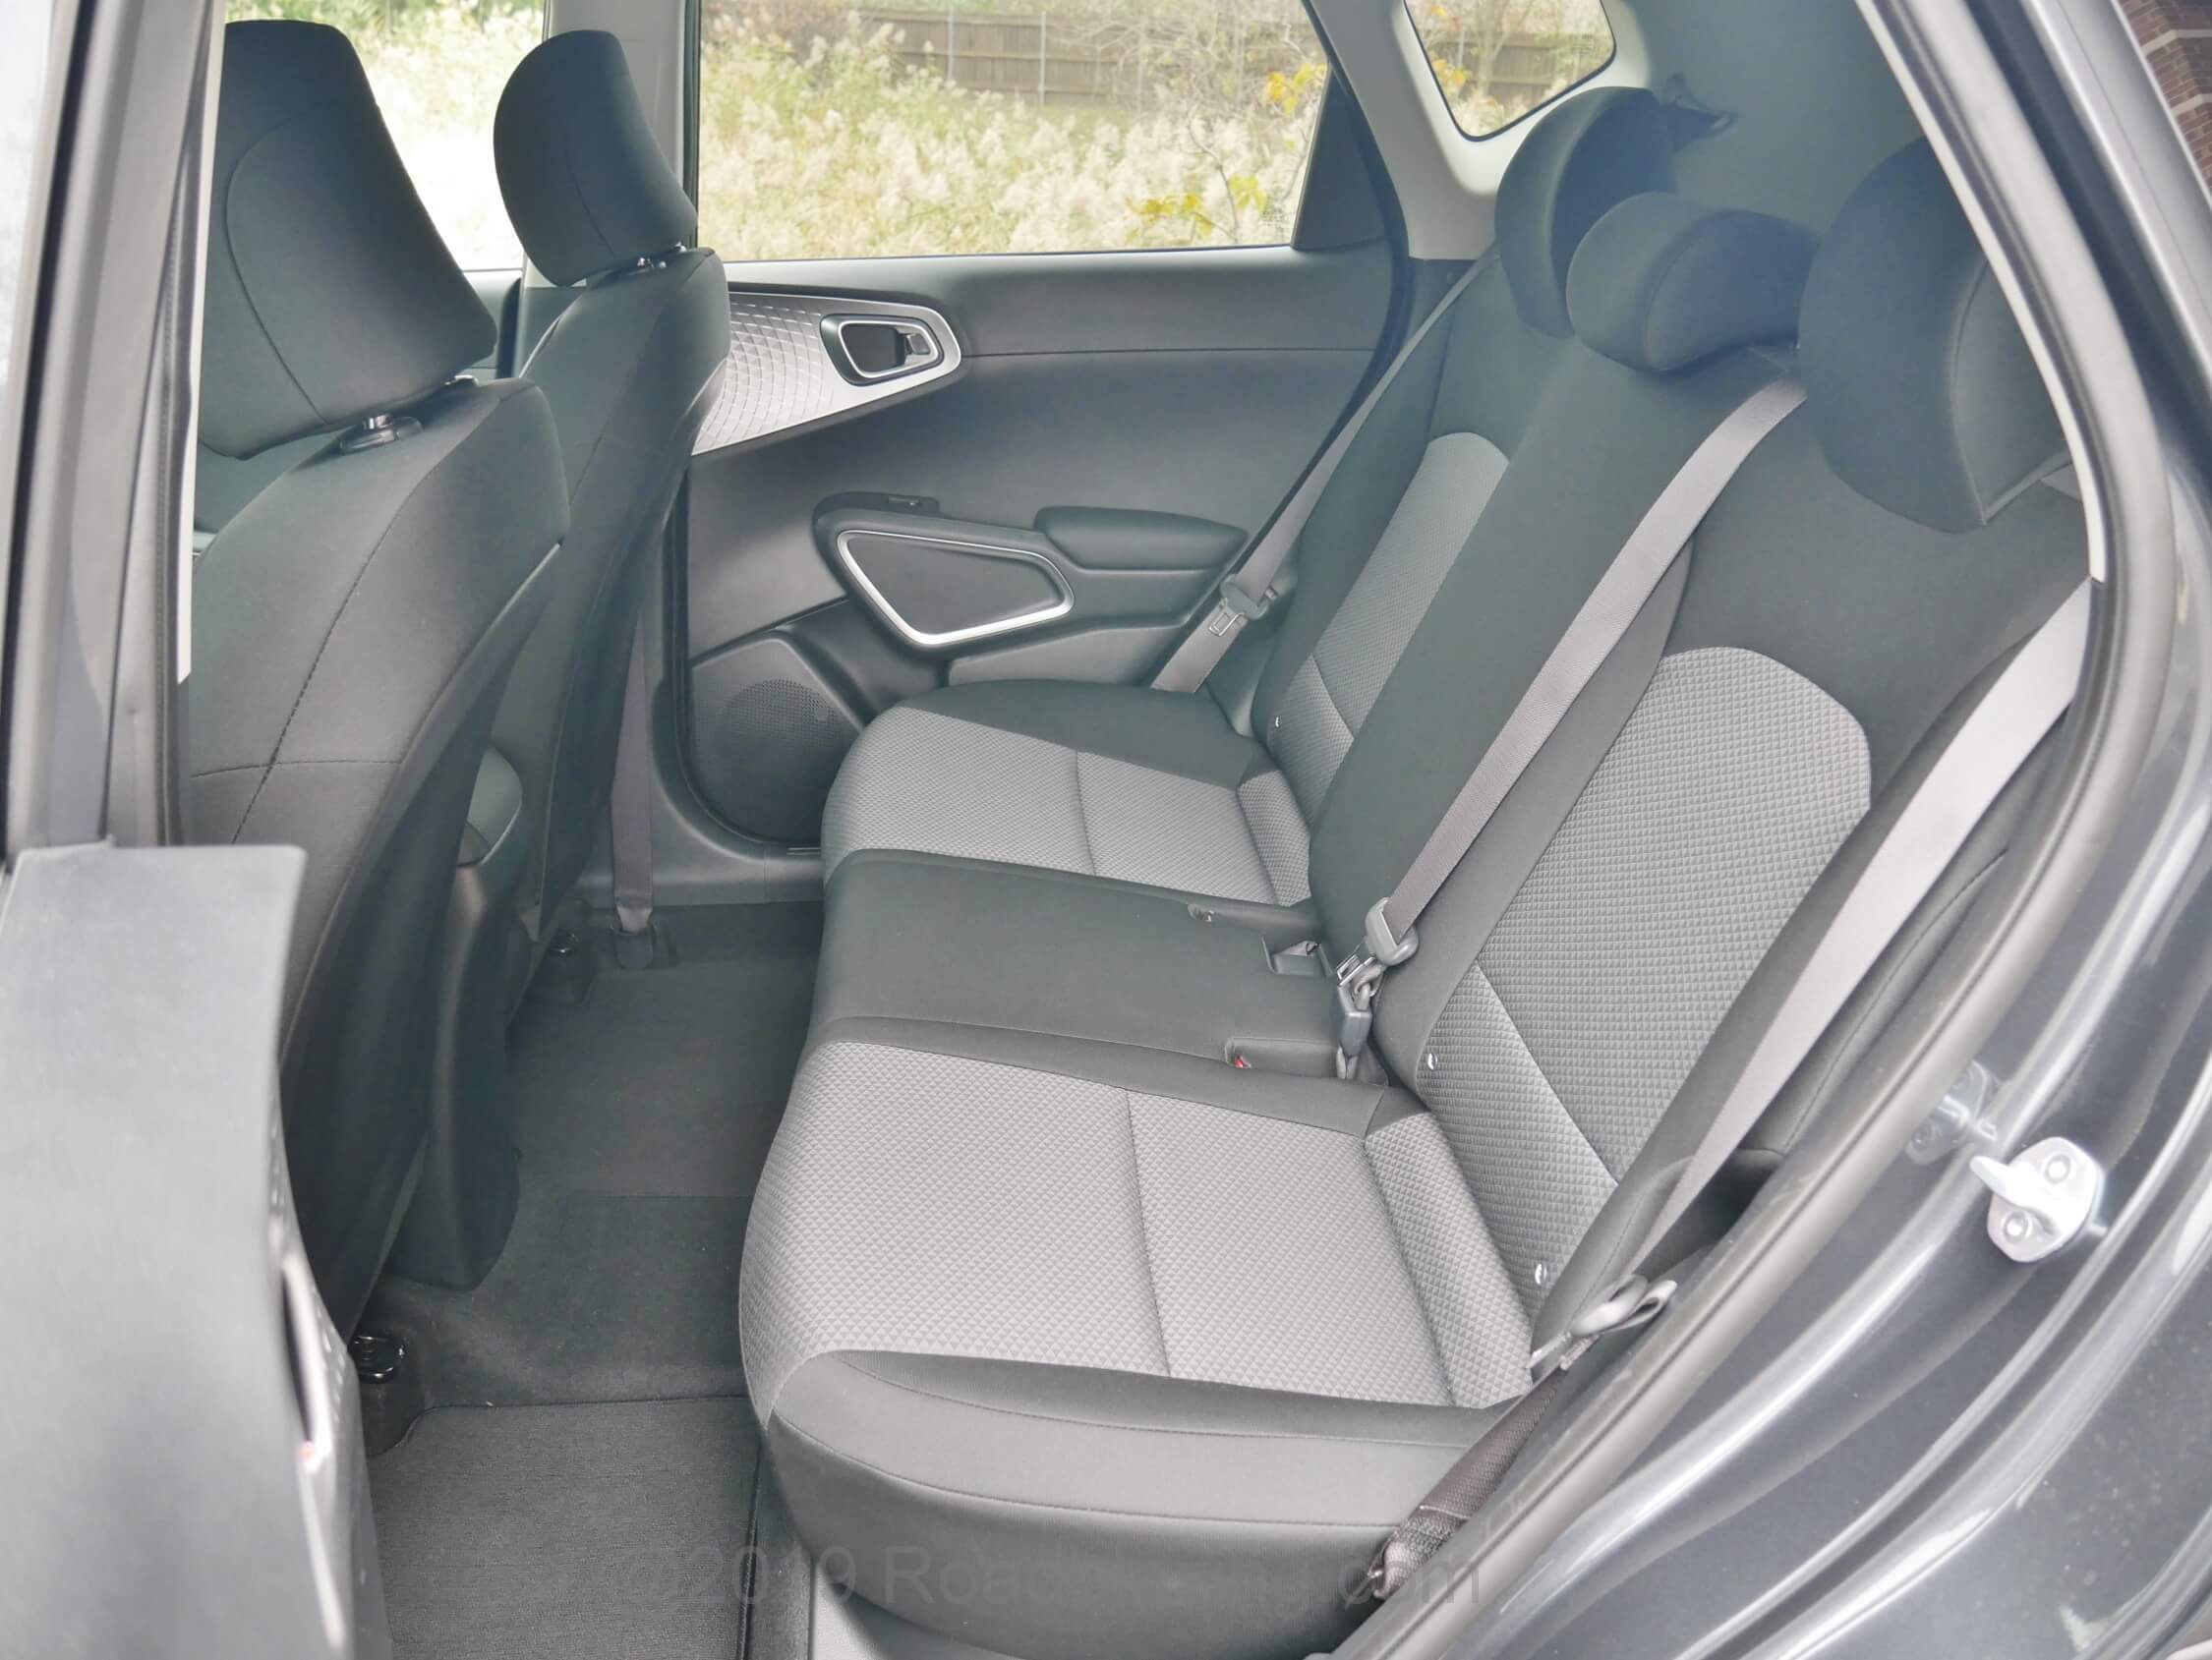 2020 Kia Soul X-Line: Tremendous, near 40" inches rear seat legroom